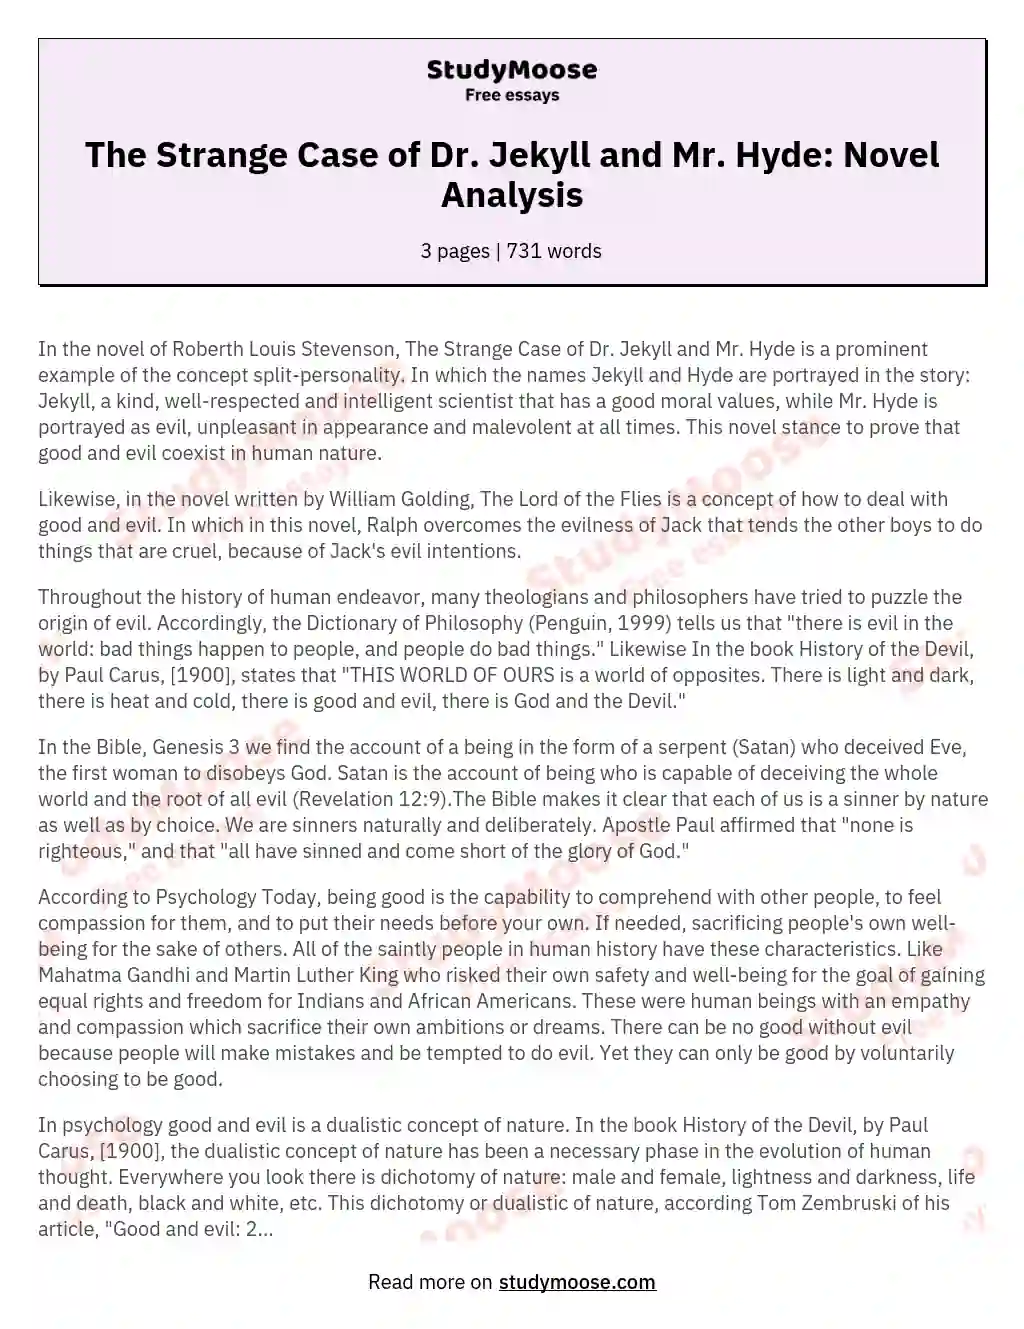 The Strange Case of Dr. Jekyll and Mr. Hyde: Novel Analysis essay